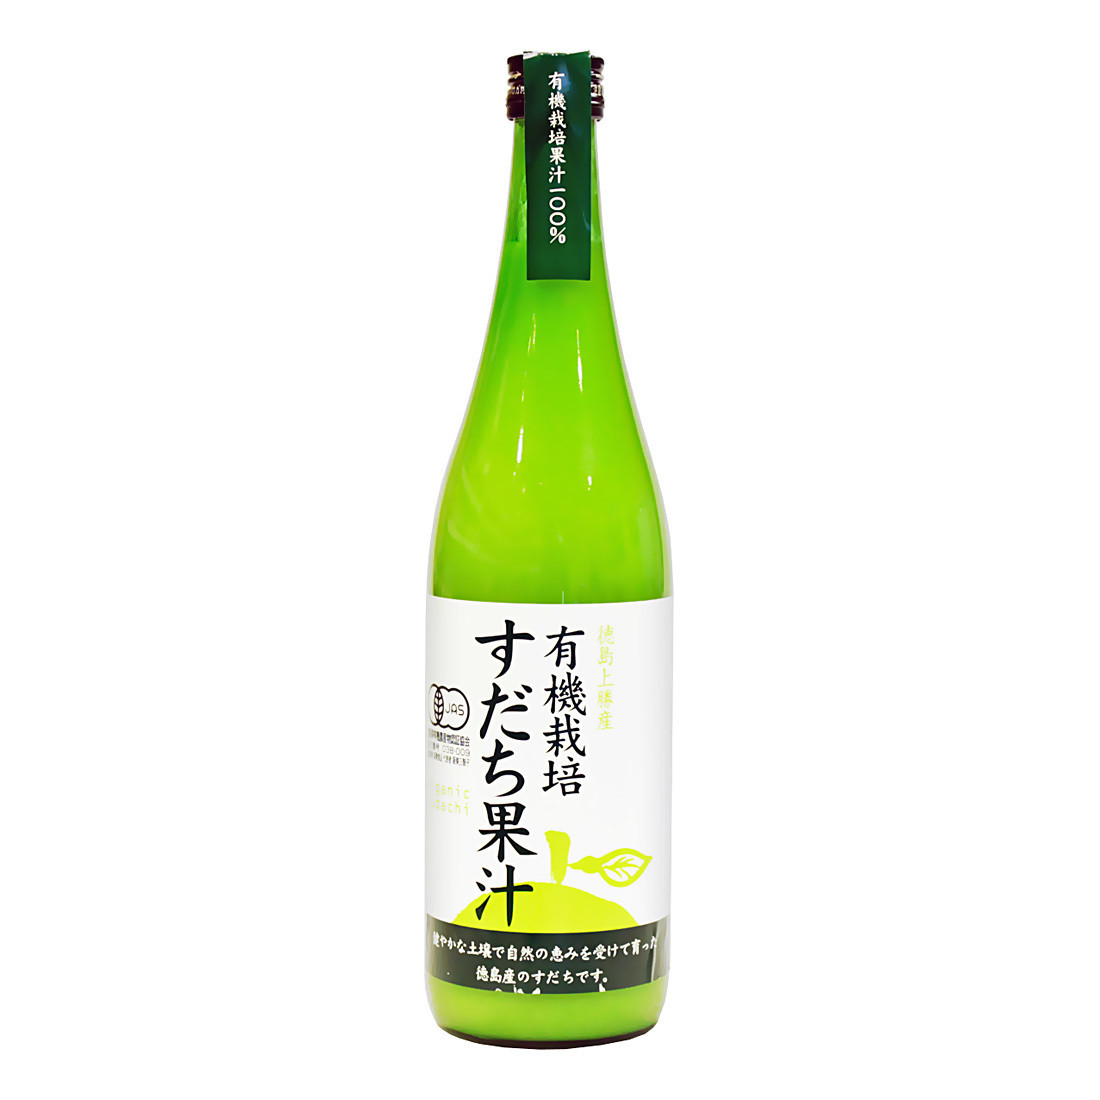 Судаши cок (organic sudachi juice extra) УМАМИ 720мл